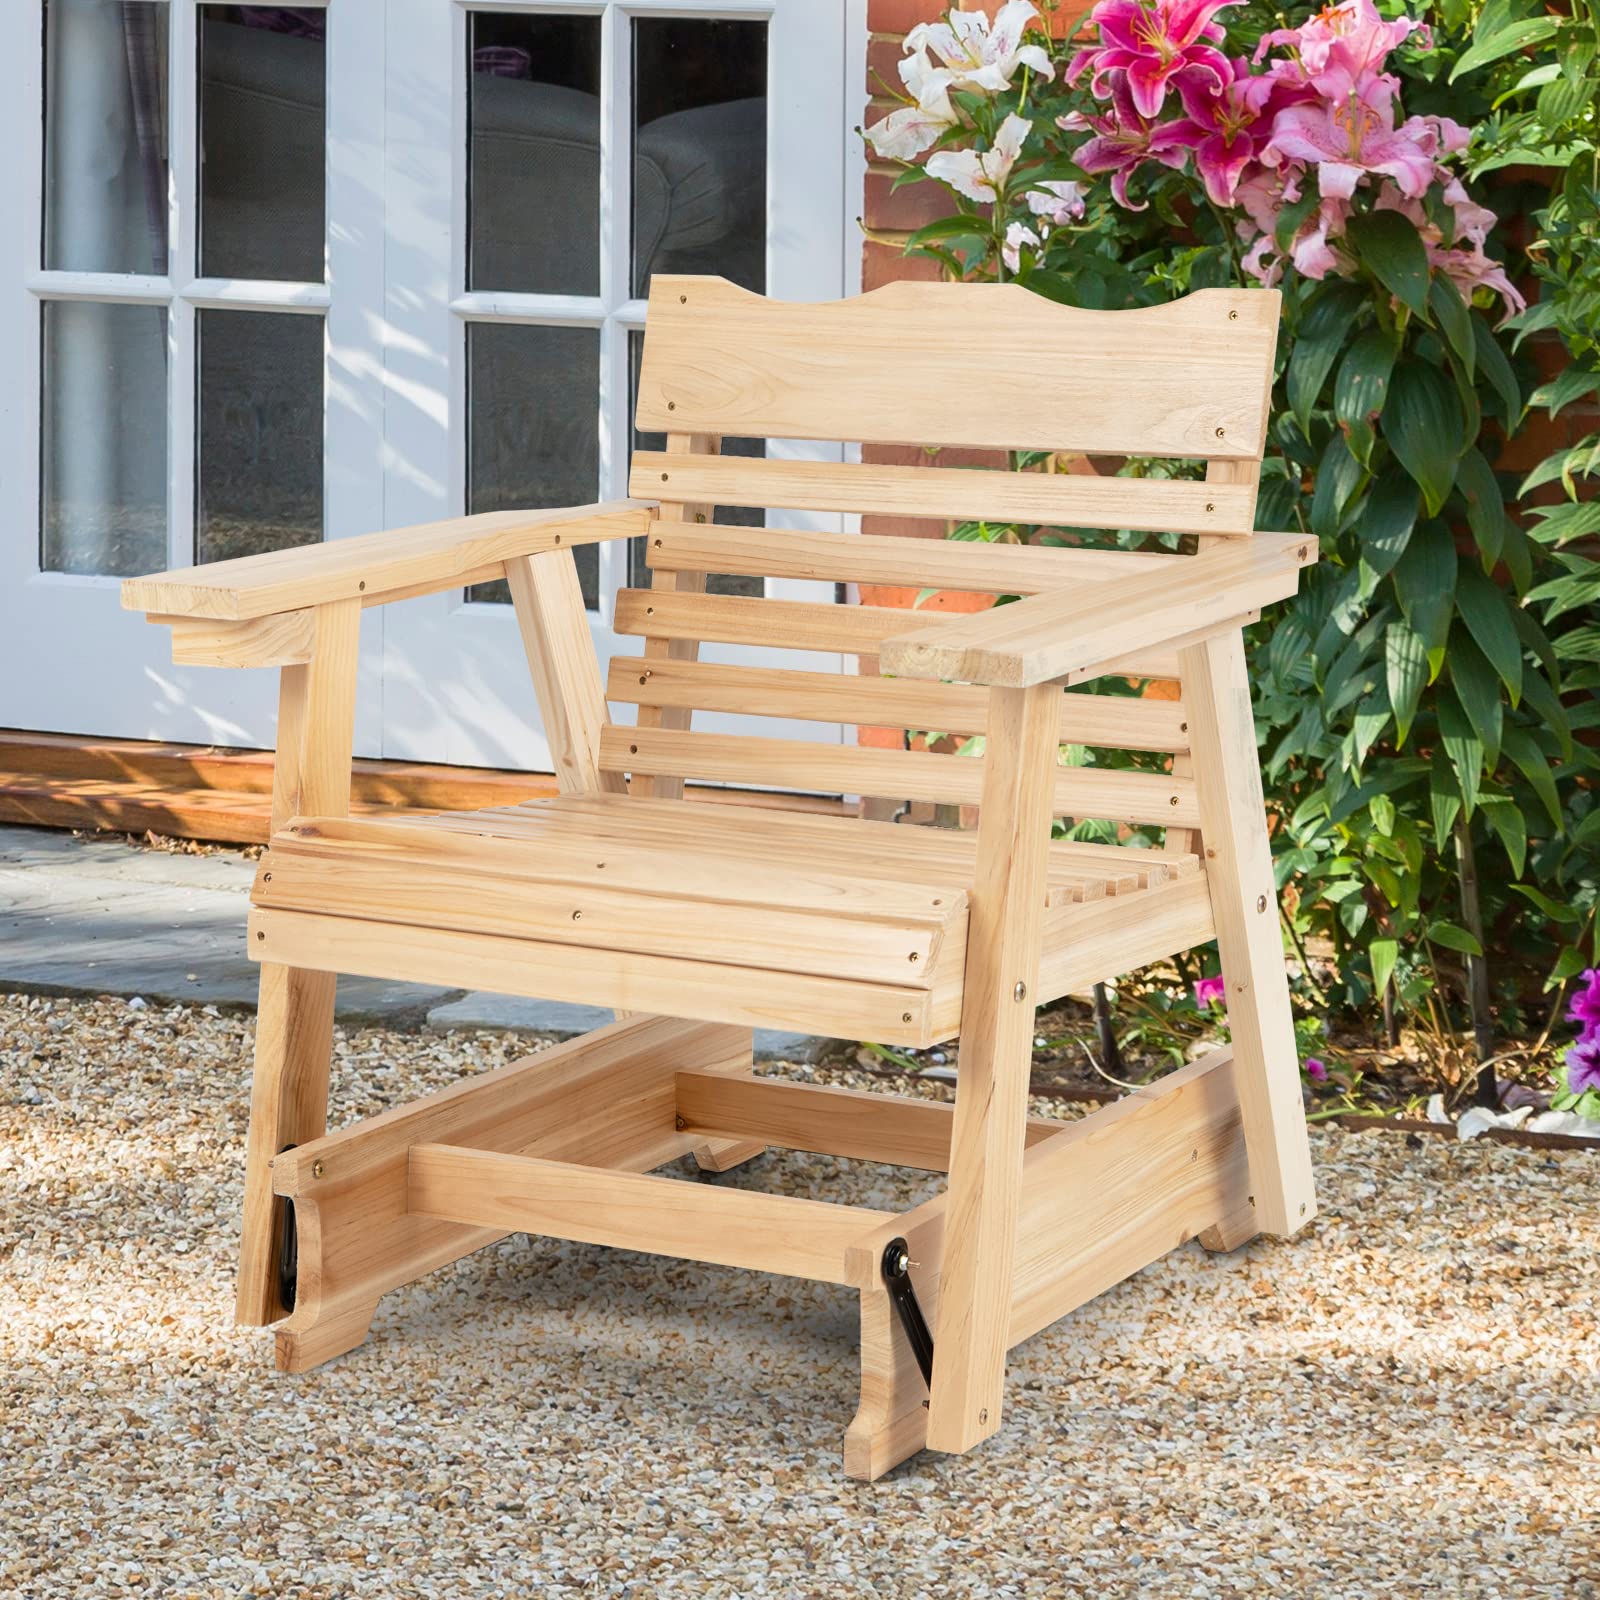 Giantex Outdoor Glider Rocking Chair - Set of 2 Wood Porch Rocker